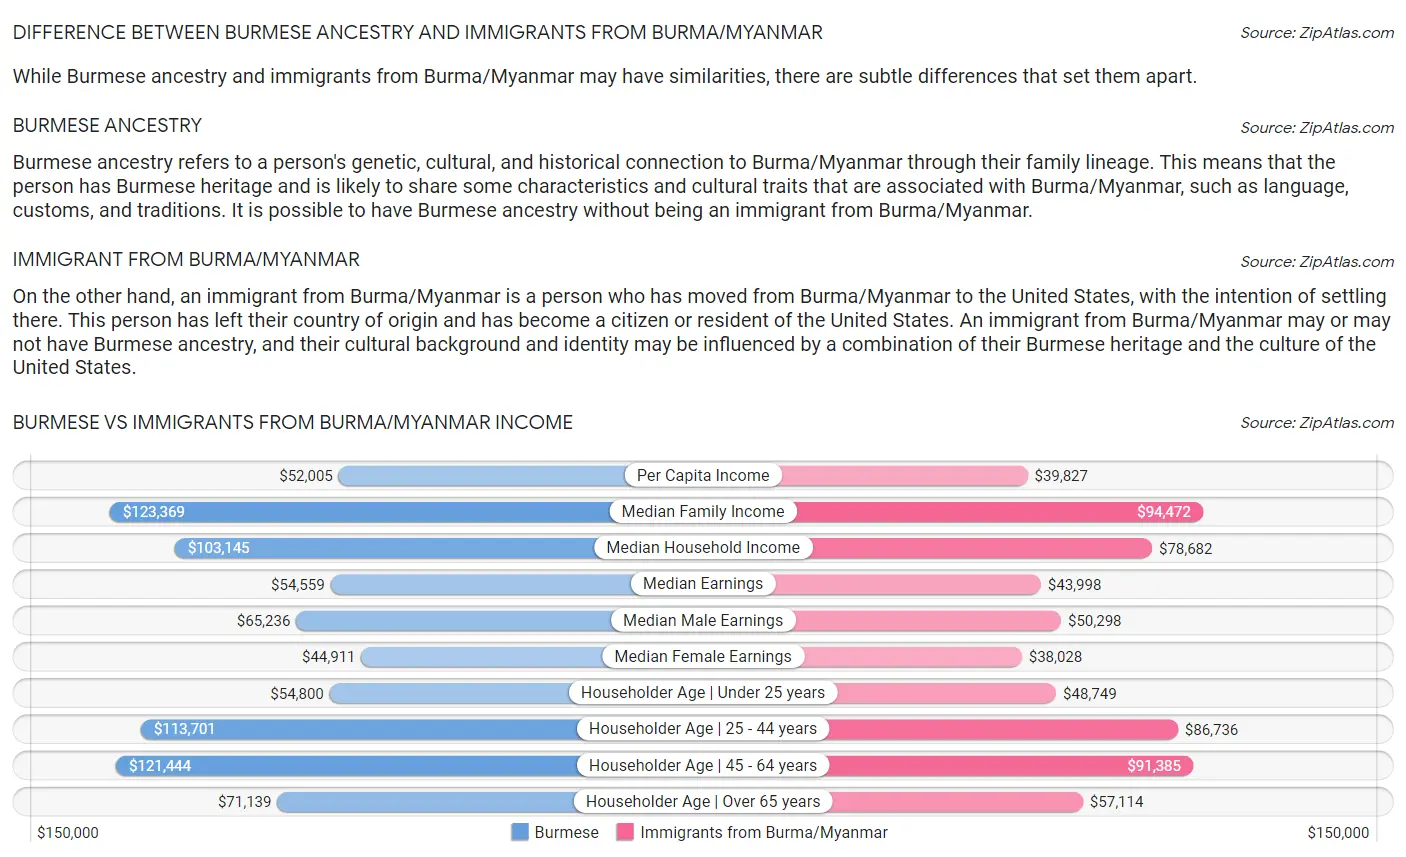 Burmese vs Immigrants from Burma/Myanmar Income